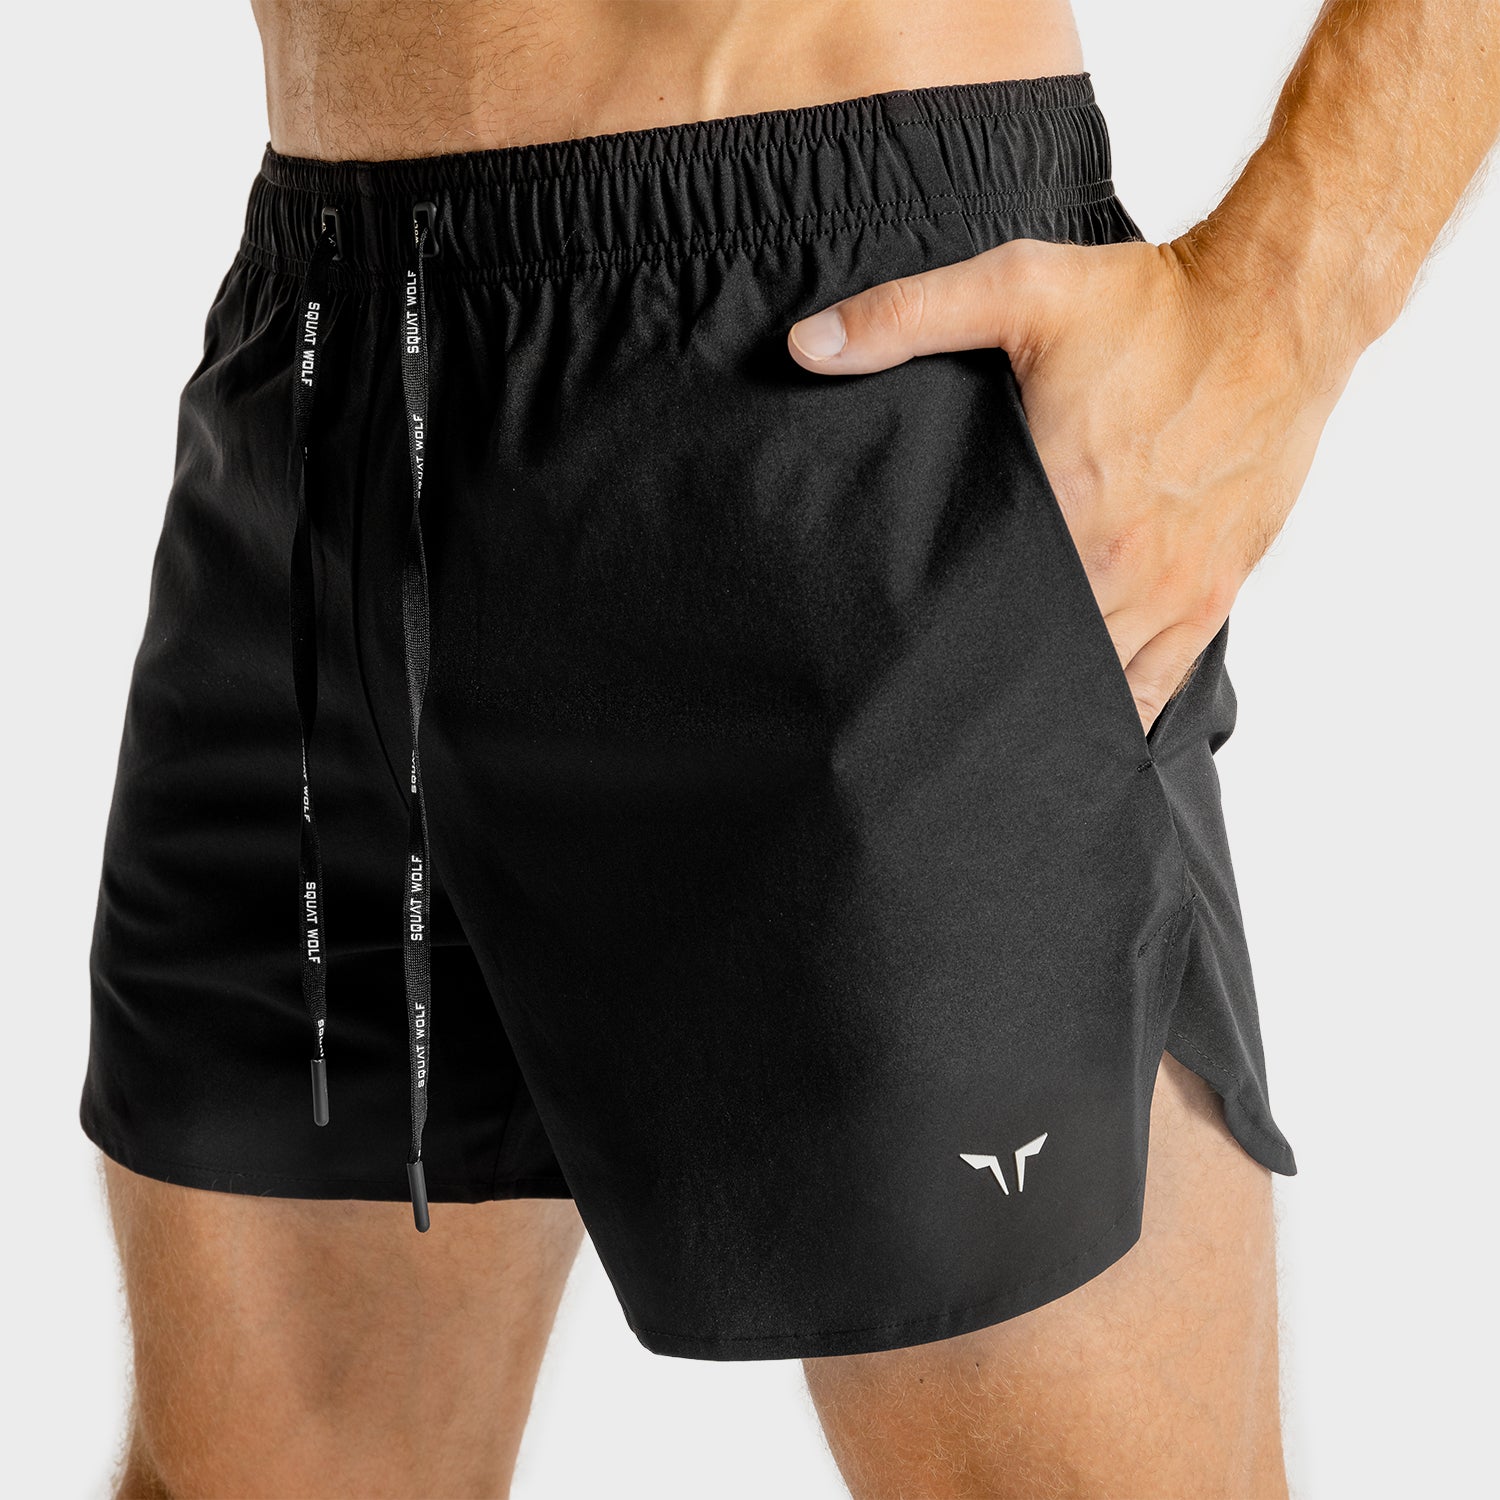 AE, LAB360° 2-in-1 Legging Shorts - Black, Gym Shorts Men